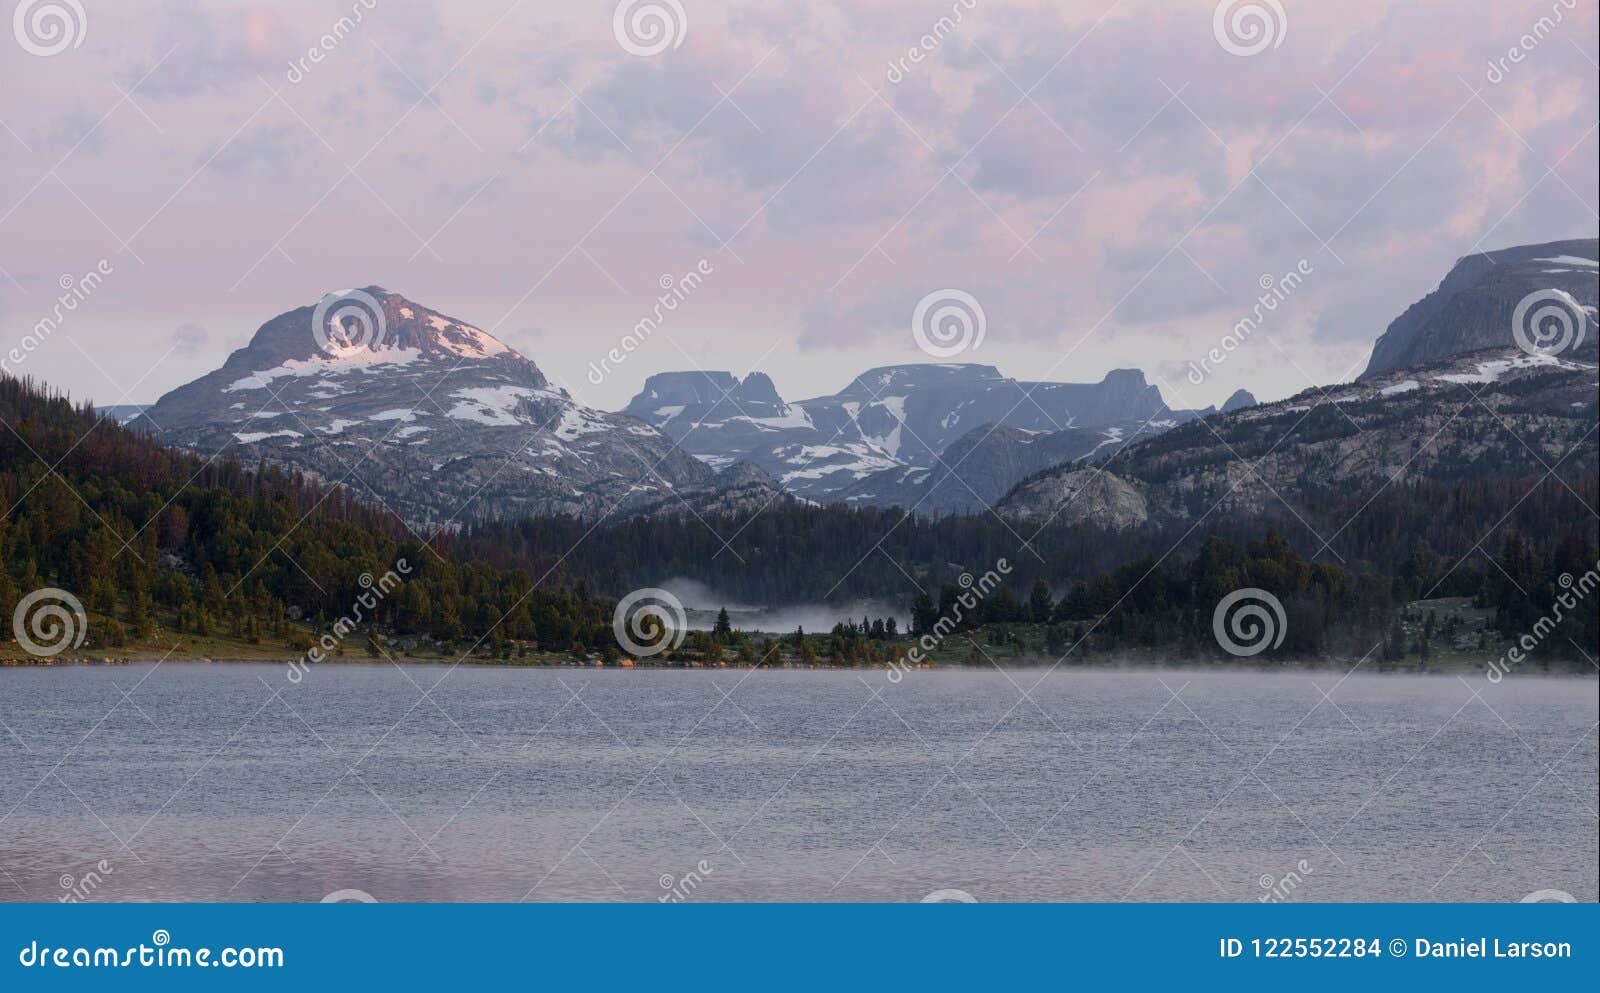 island lake in the beartooth mountains